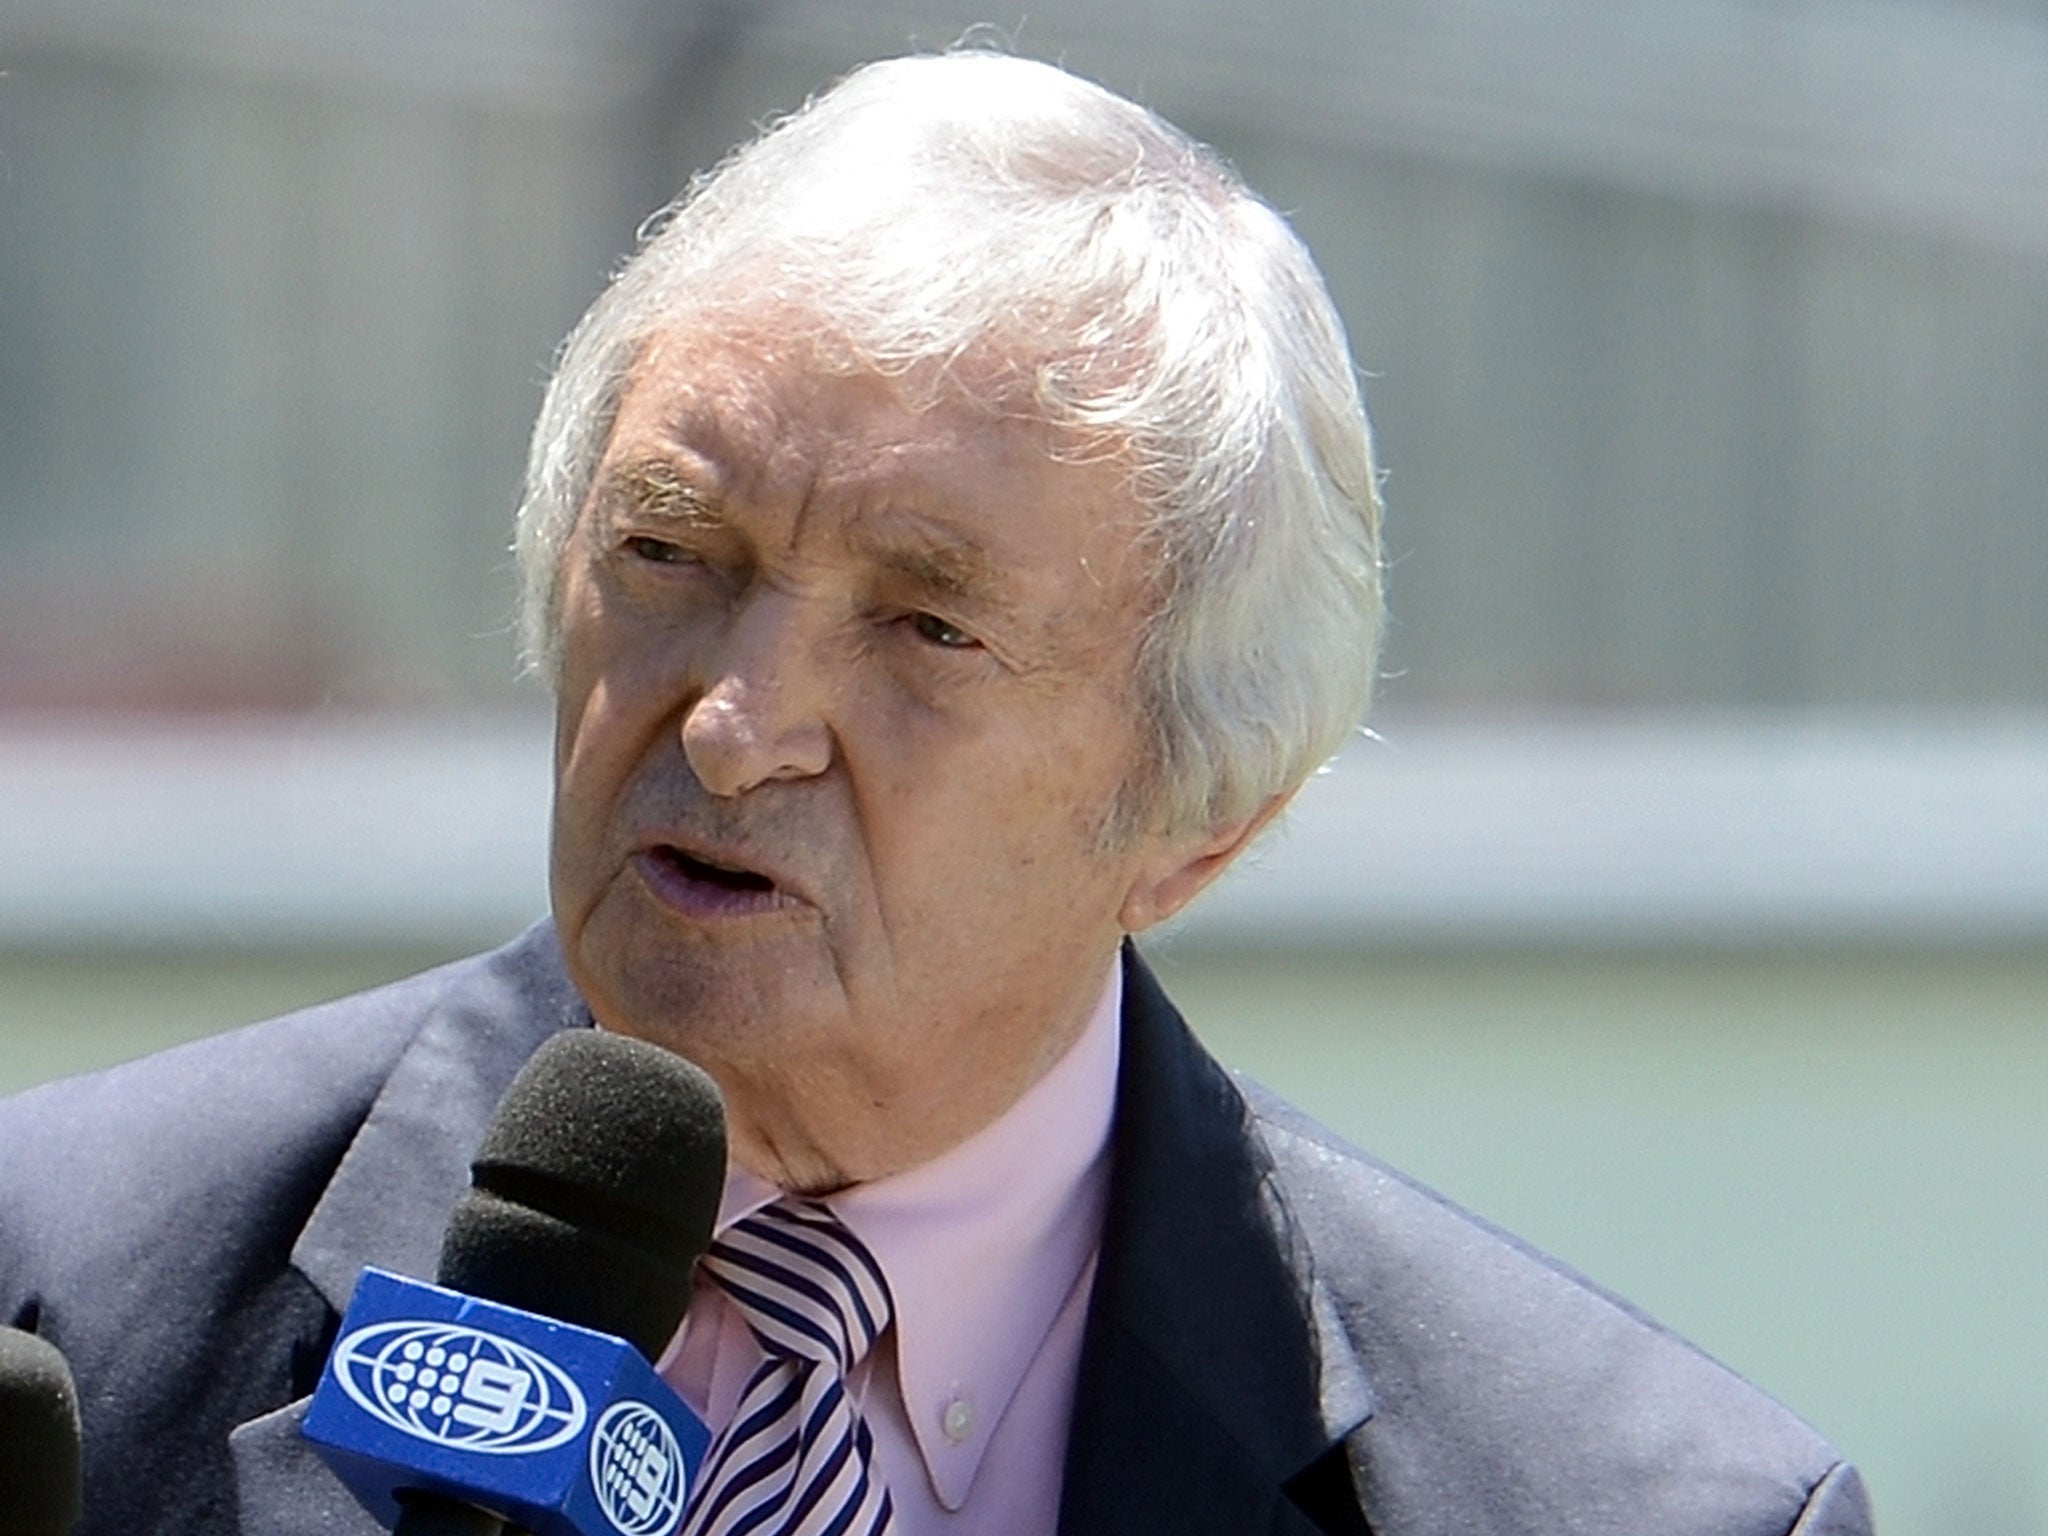 Former Australia cricketer, journalist and broadcaster Richie Benaud